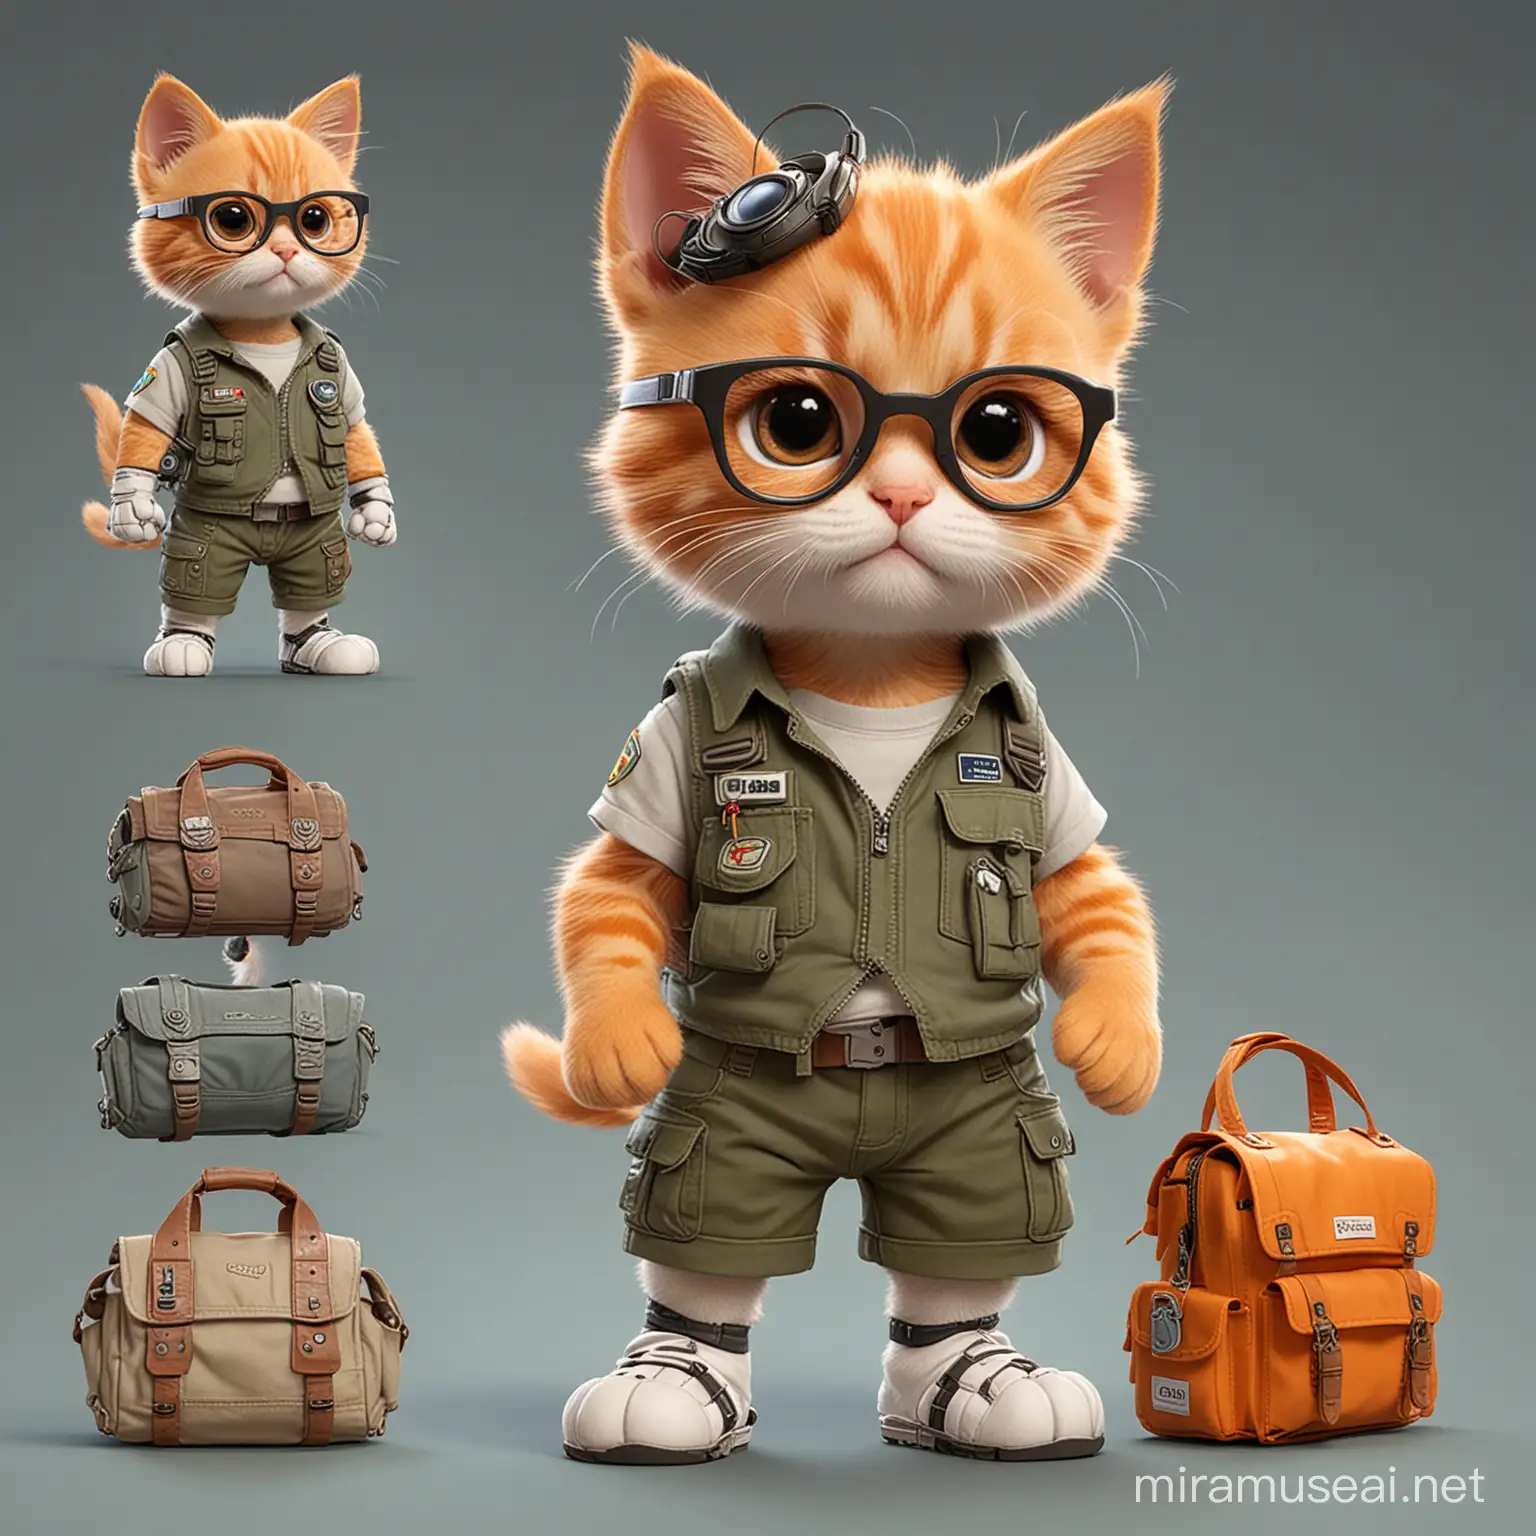 Generate an adorable 3D Pixar-style clipart of a baby orange kitten wearing cargo shorts, t-shirt with cartoon robot image, vest, pilot googles, adventure belt and messanger bag